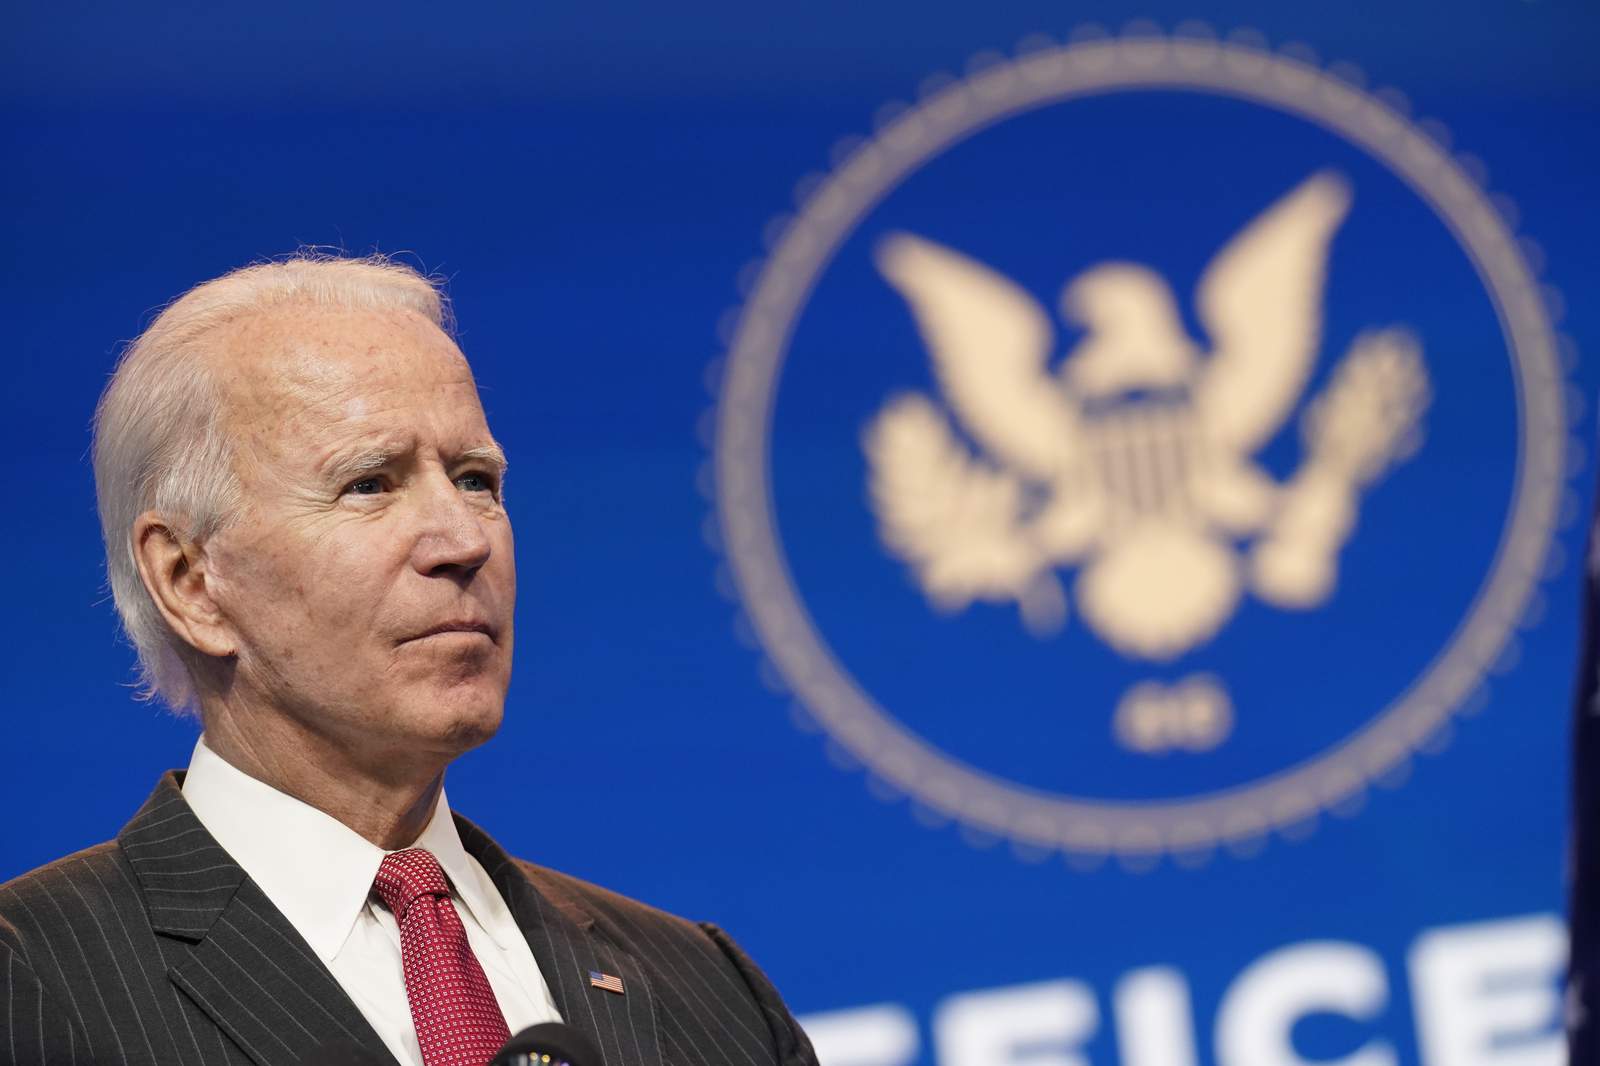 Georgia secretary of state certifies presidential election results for Joe Biden